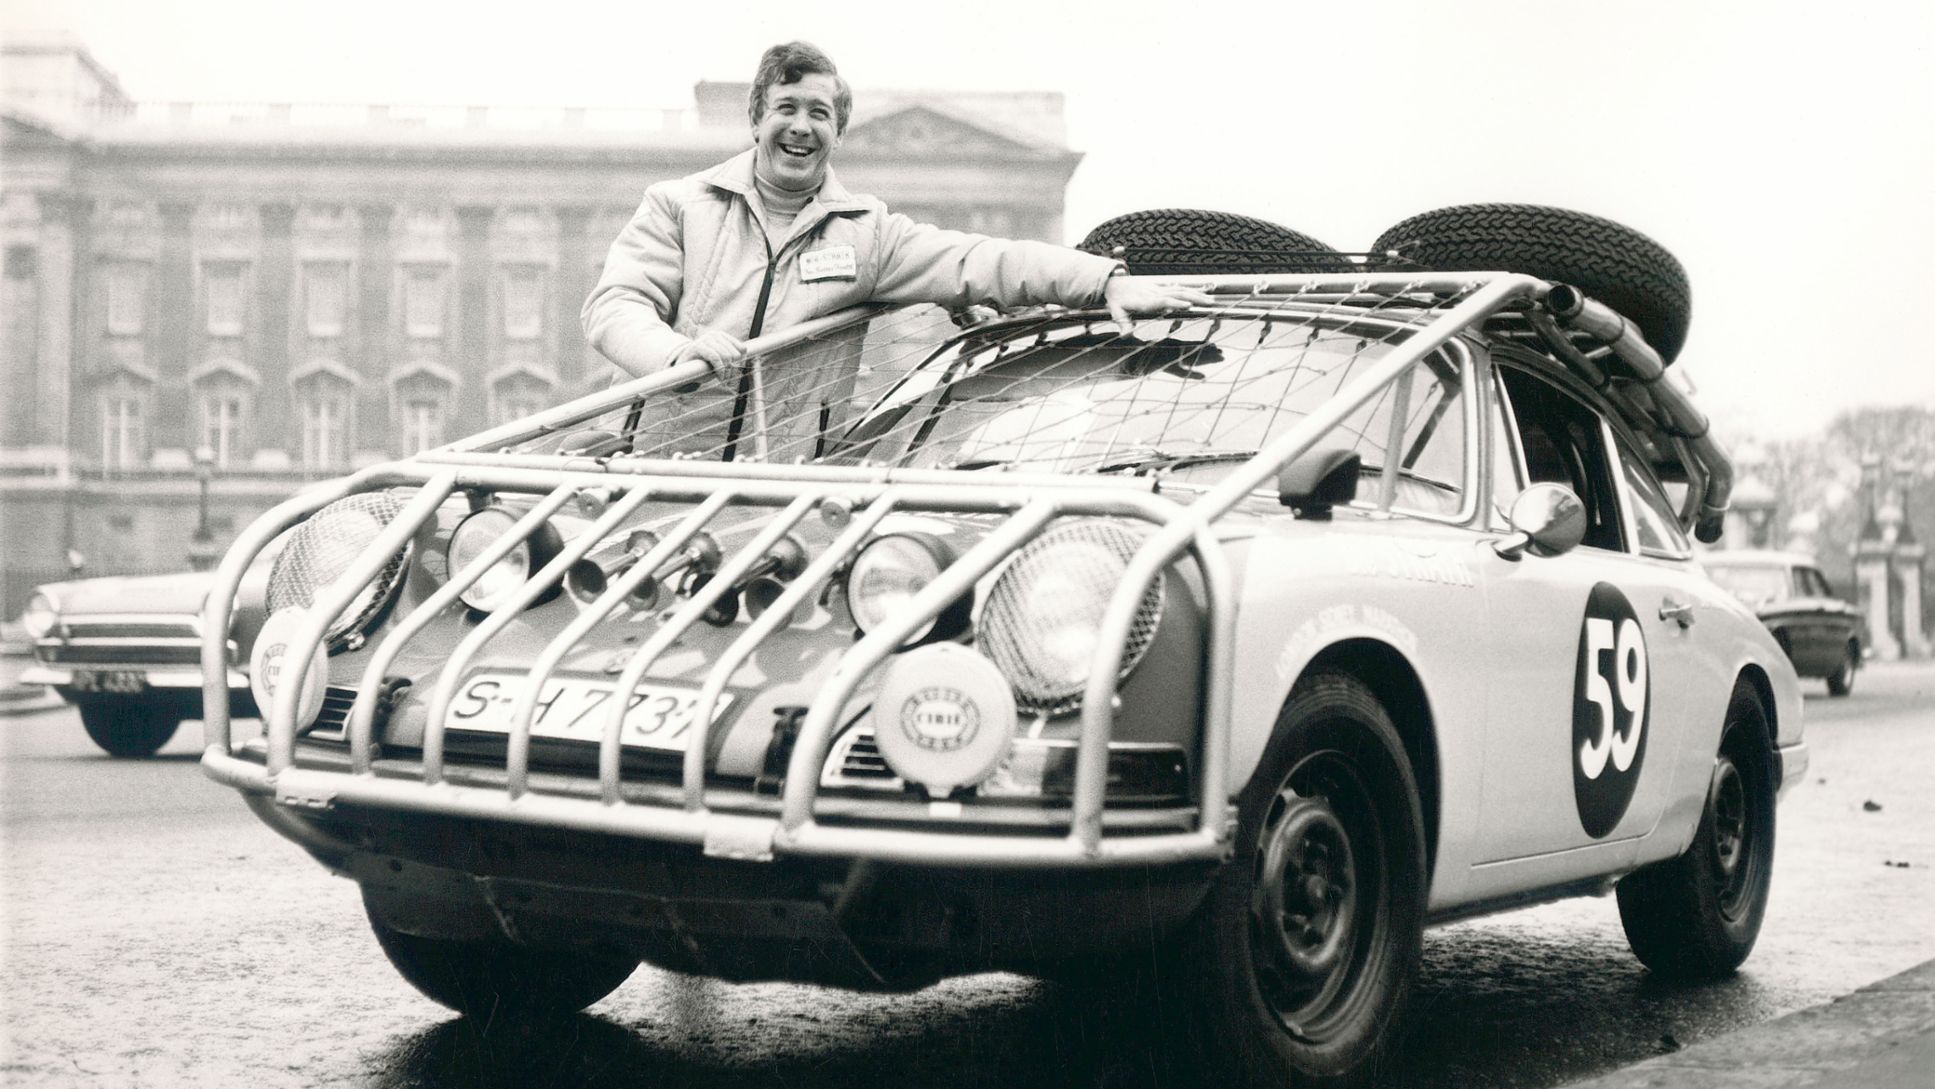 1968 London-Sydney, Porsche 911 S 2,0, Porsche AG